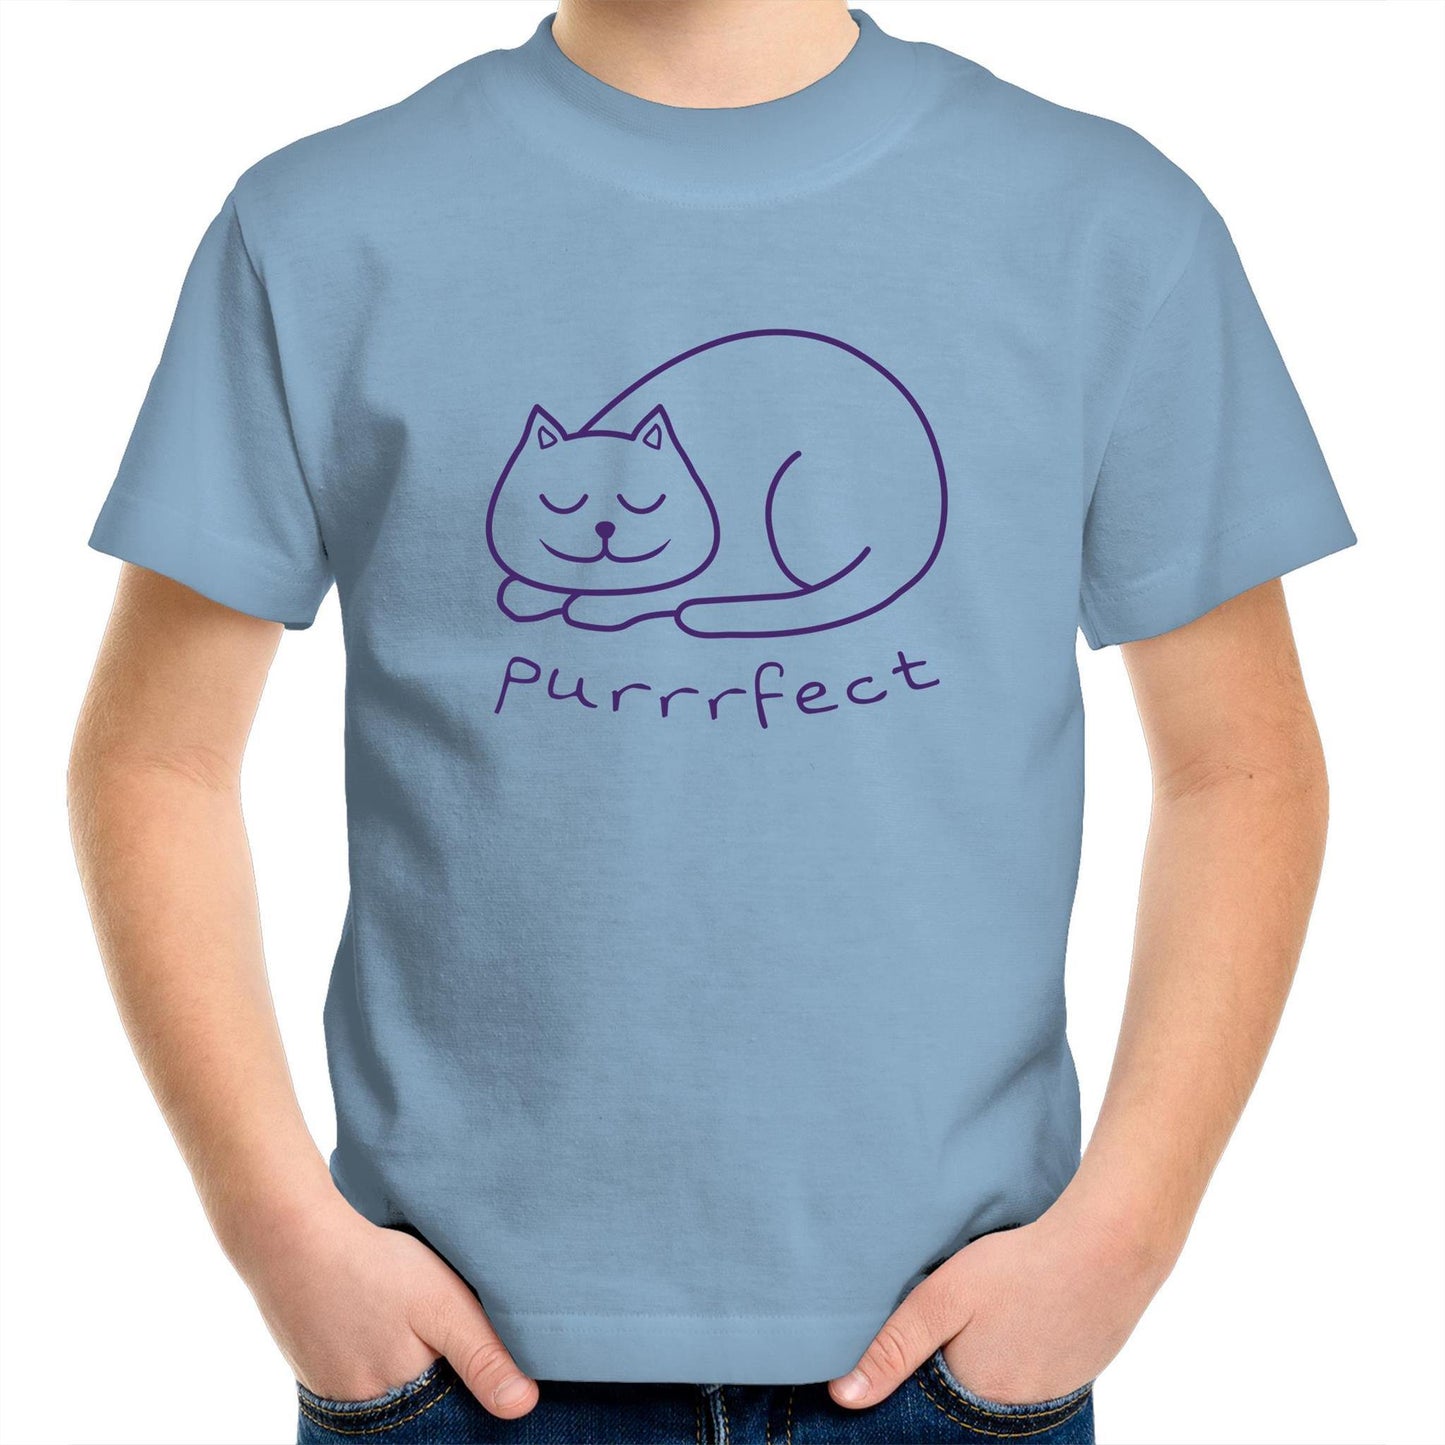 Purrrfect - Kids Youth Crew T-Shirt Carolina Blue Kids Youth T-shirt animal